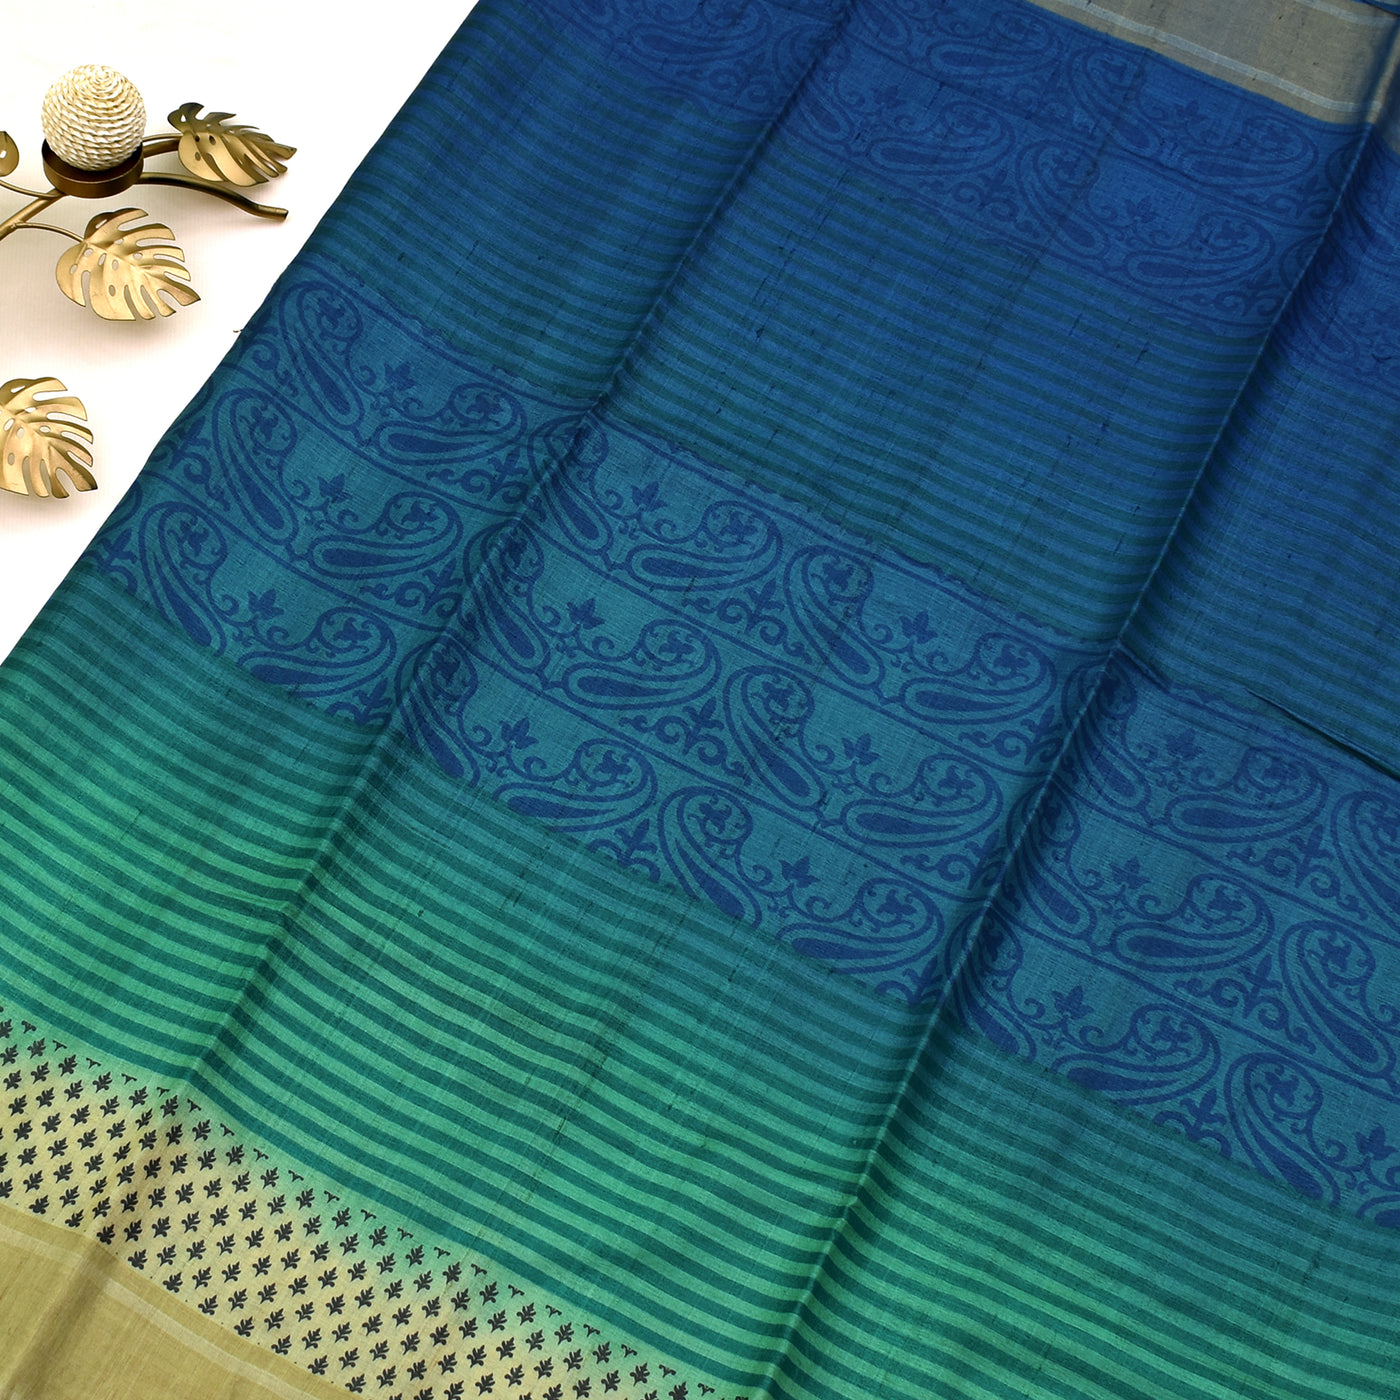 MS Blue Tussar Silk Saree with printed body